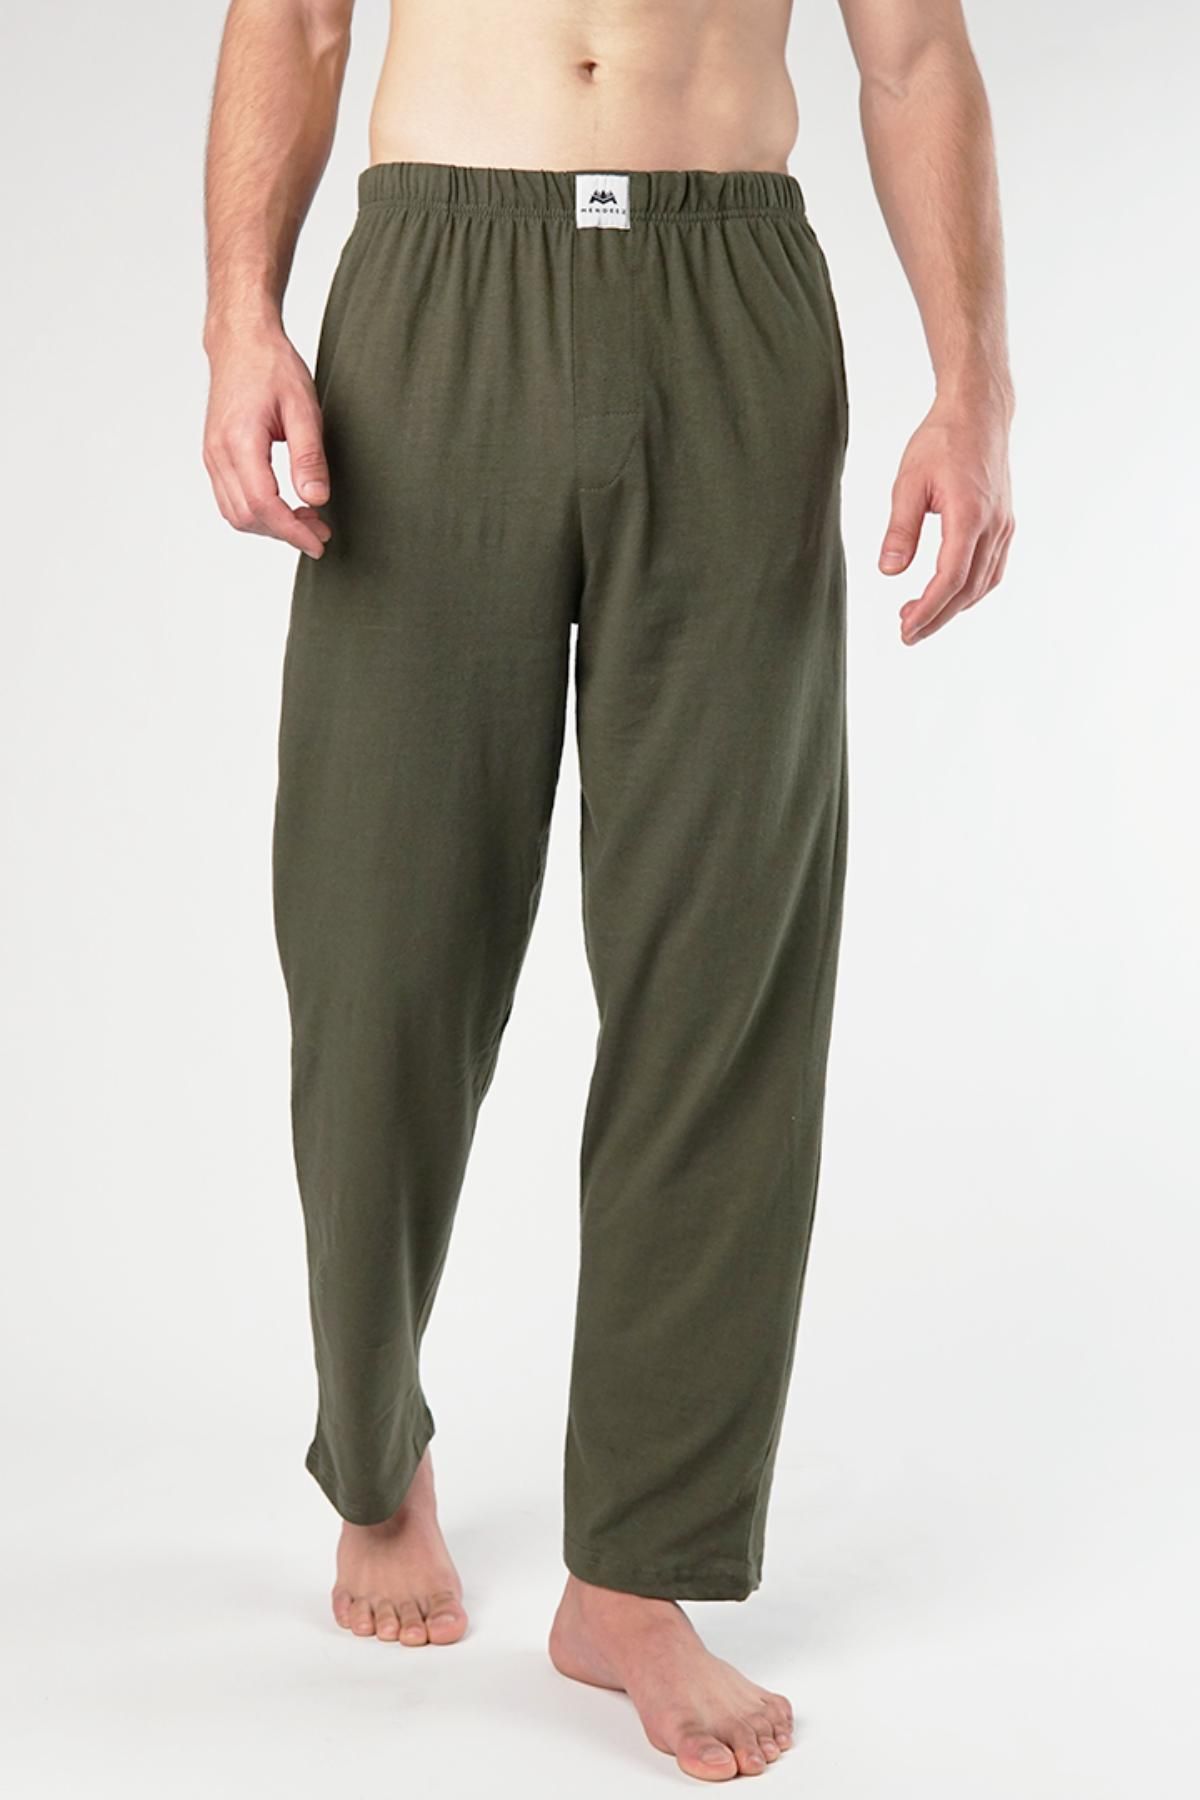 MENDEEZ Jersey Pajama Pants - Olive Green Olive Green Men Pyjamas